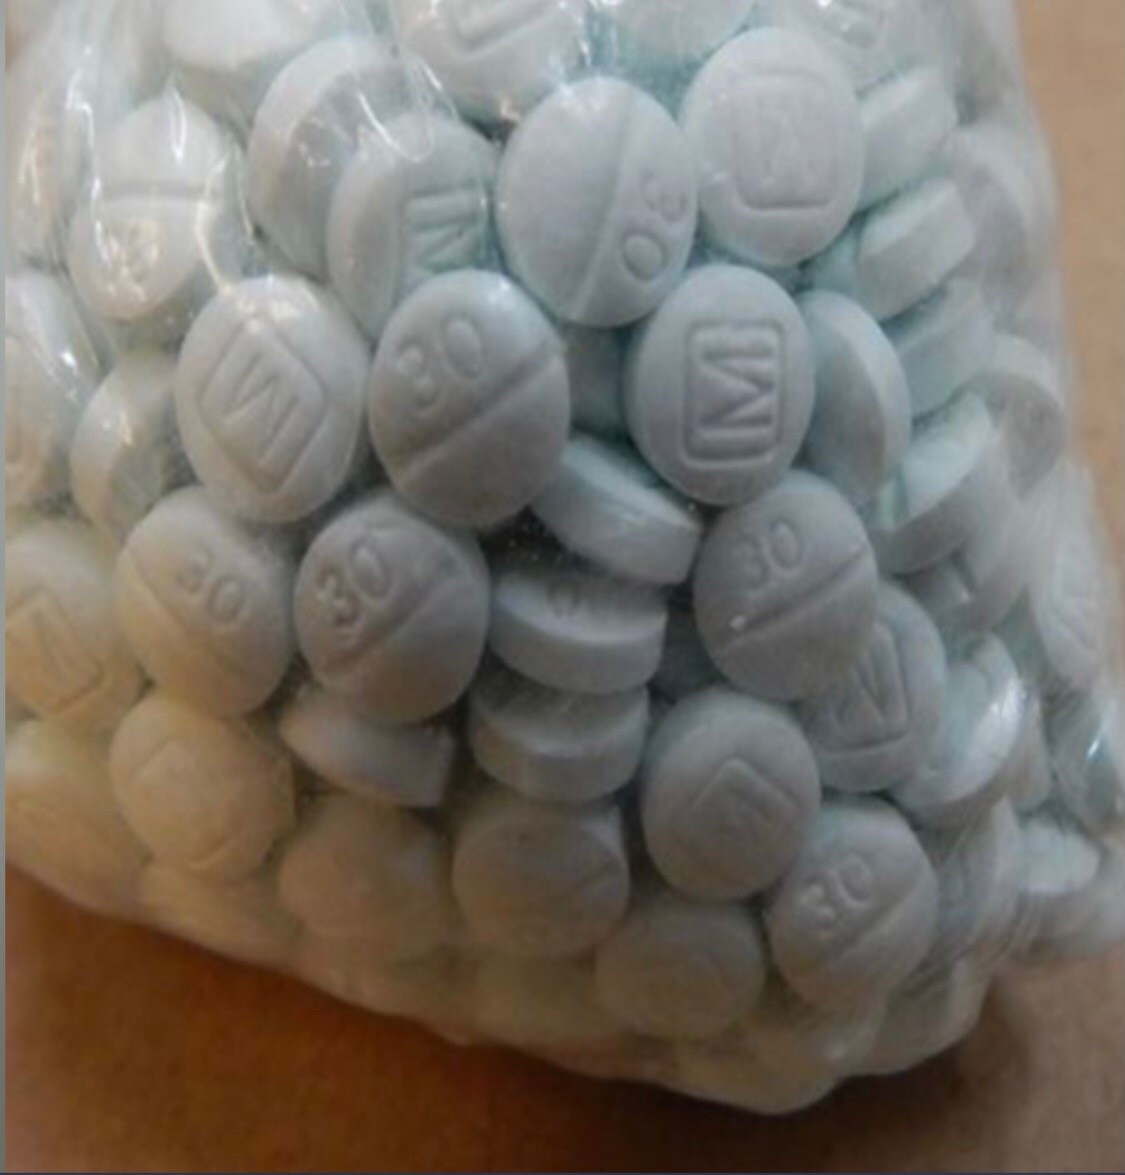 laced pills.jpg